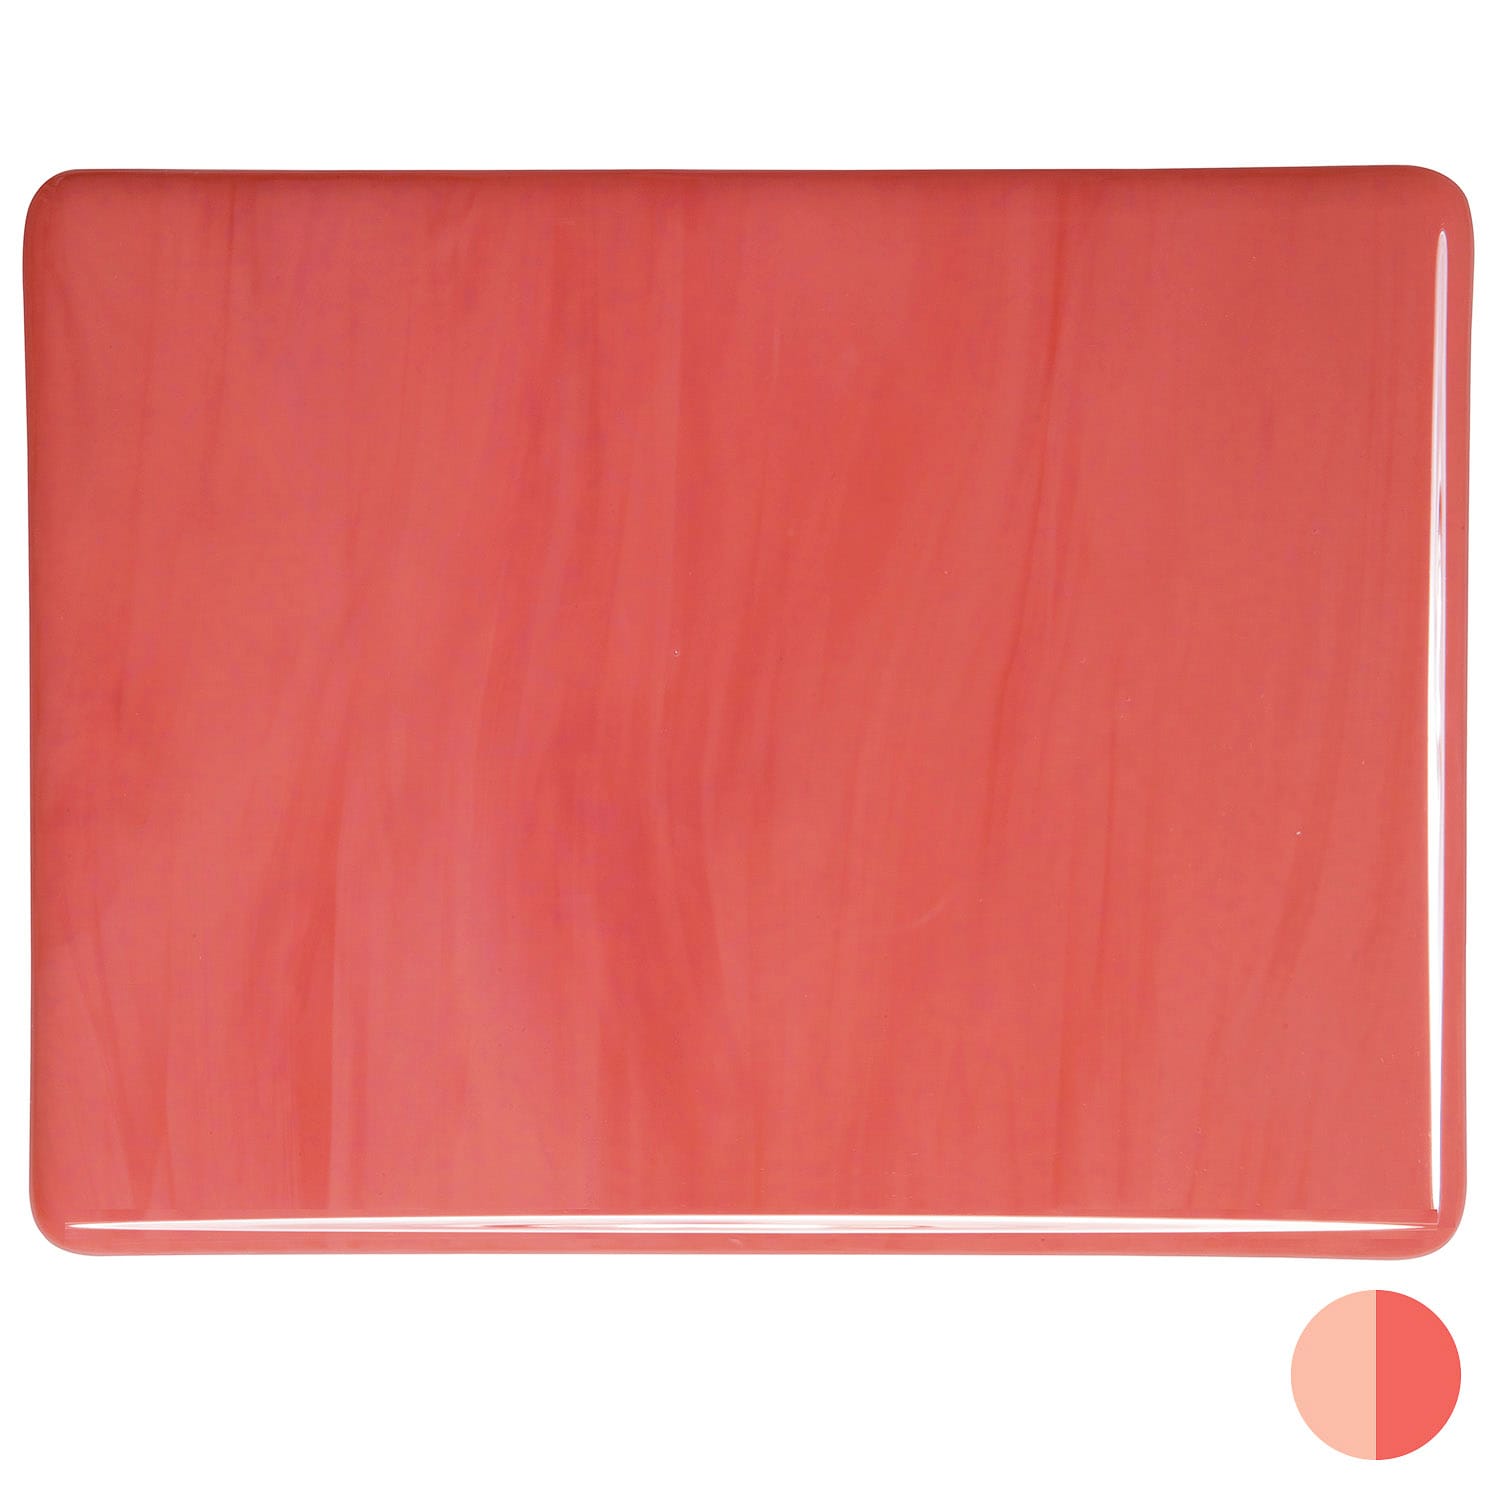 Bullseye COE90 Fusing Glass 000305 Salmon Pink Handy Sheet